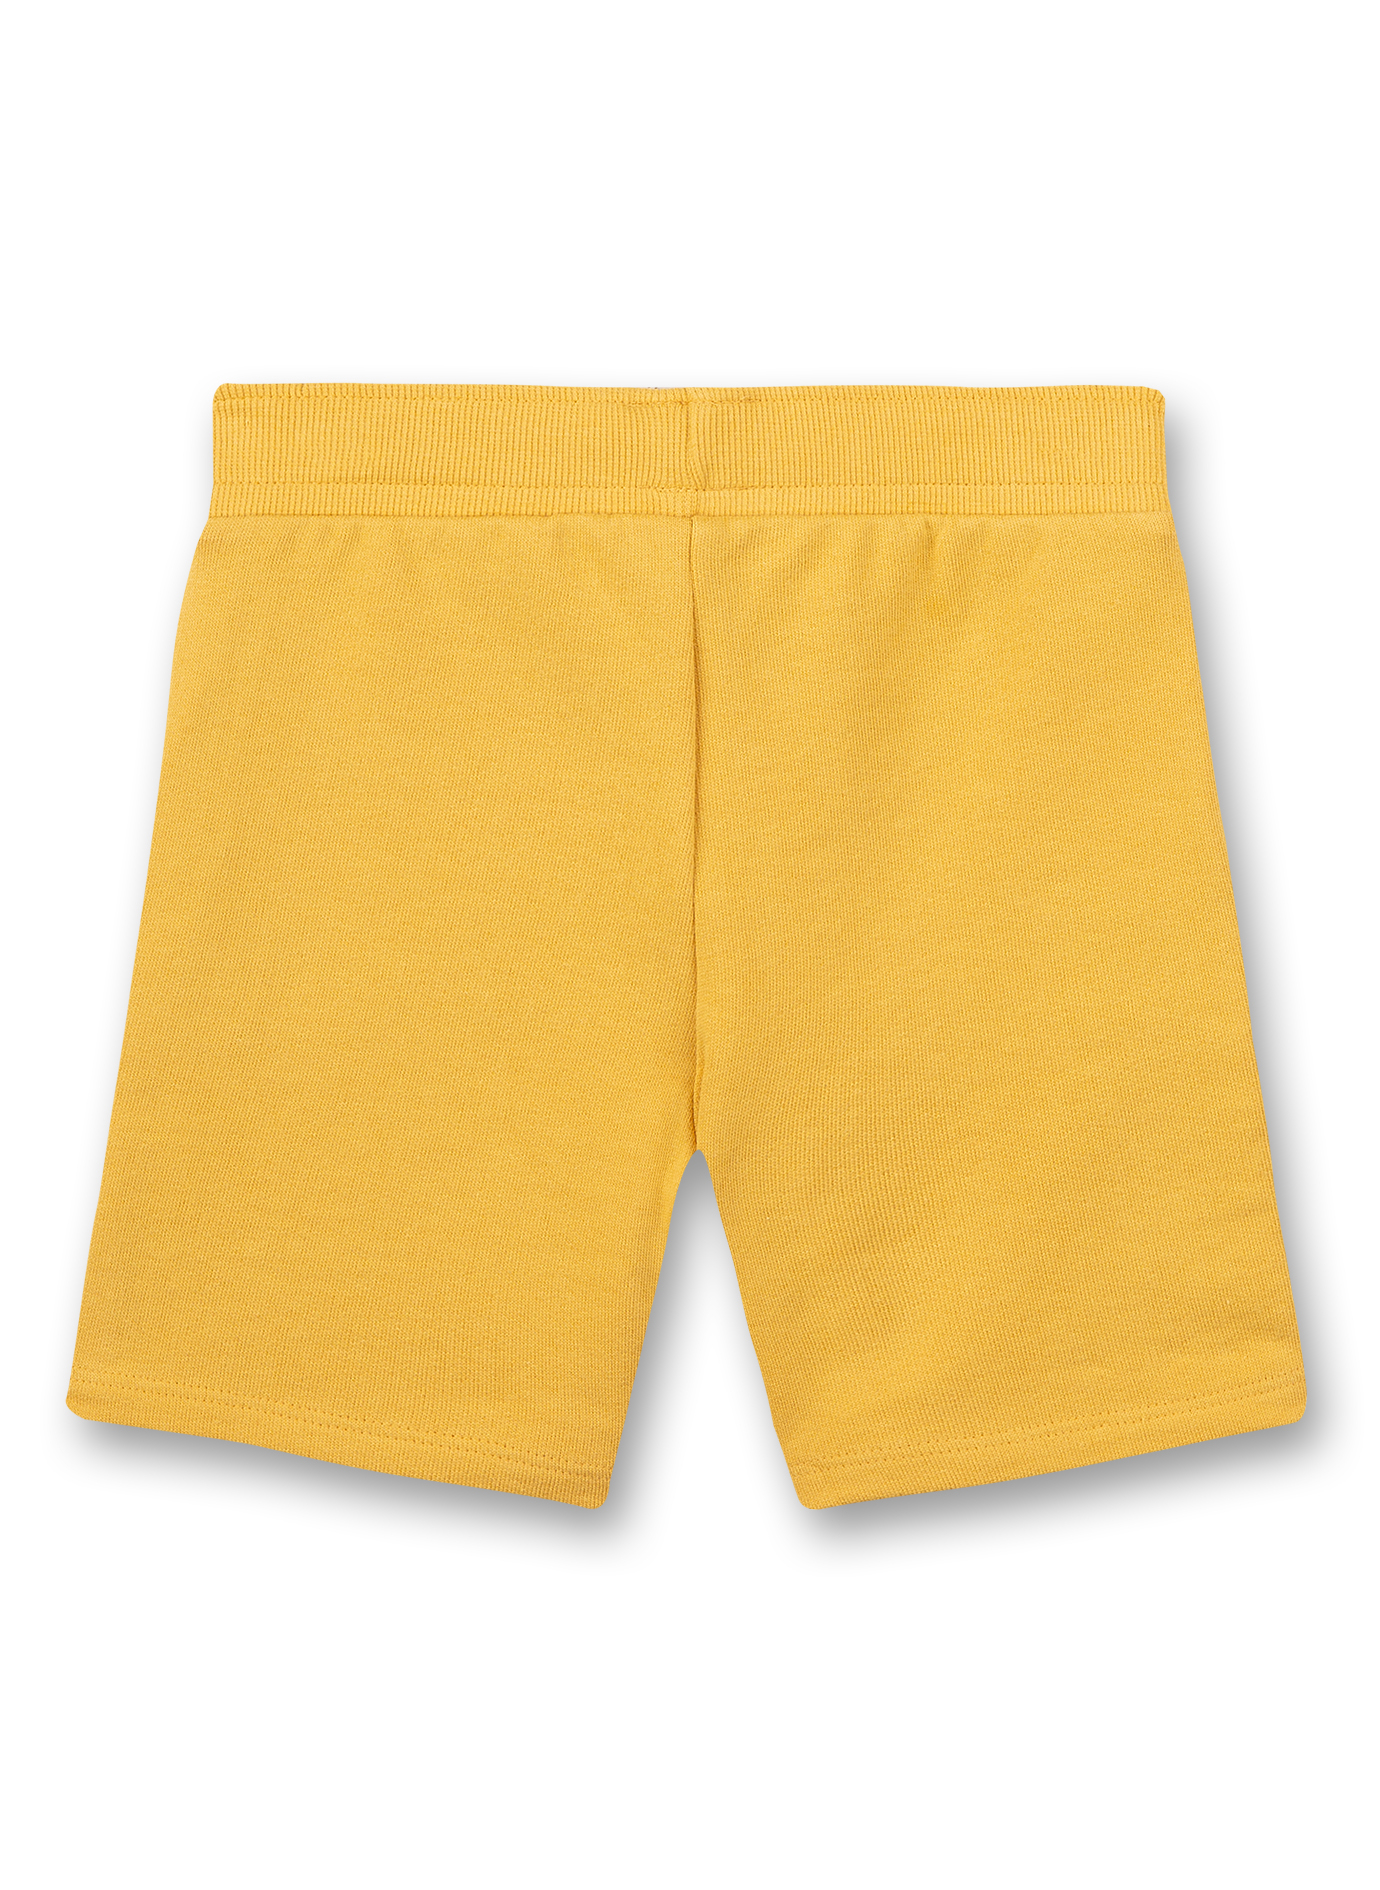 Jungen-Shorts Gelb